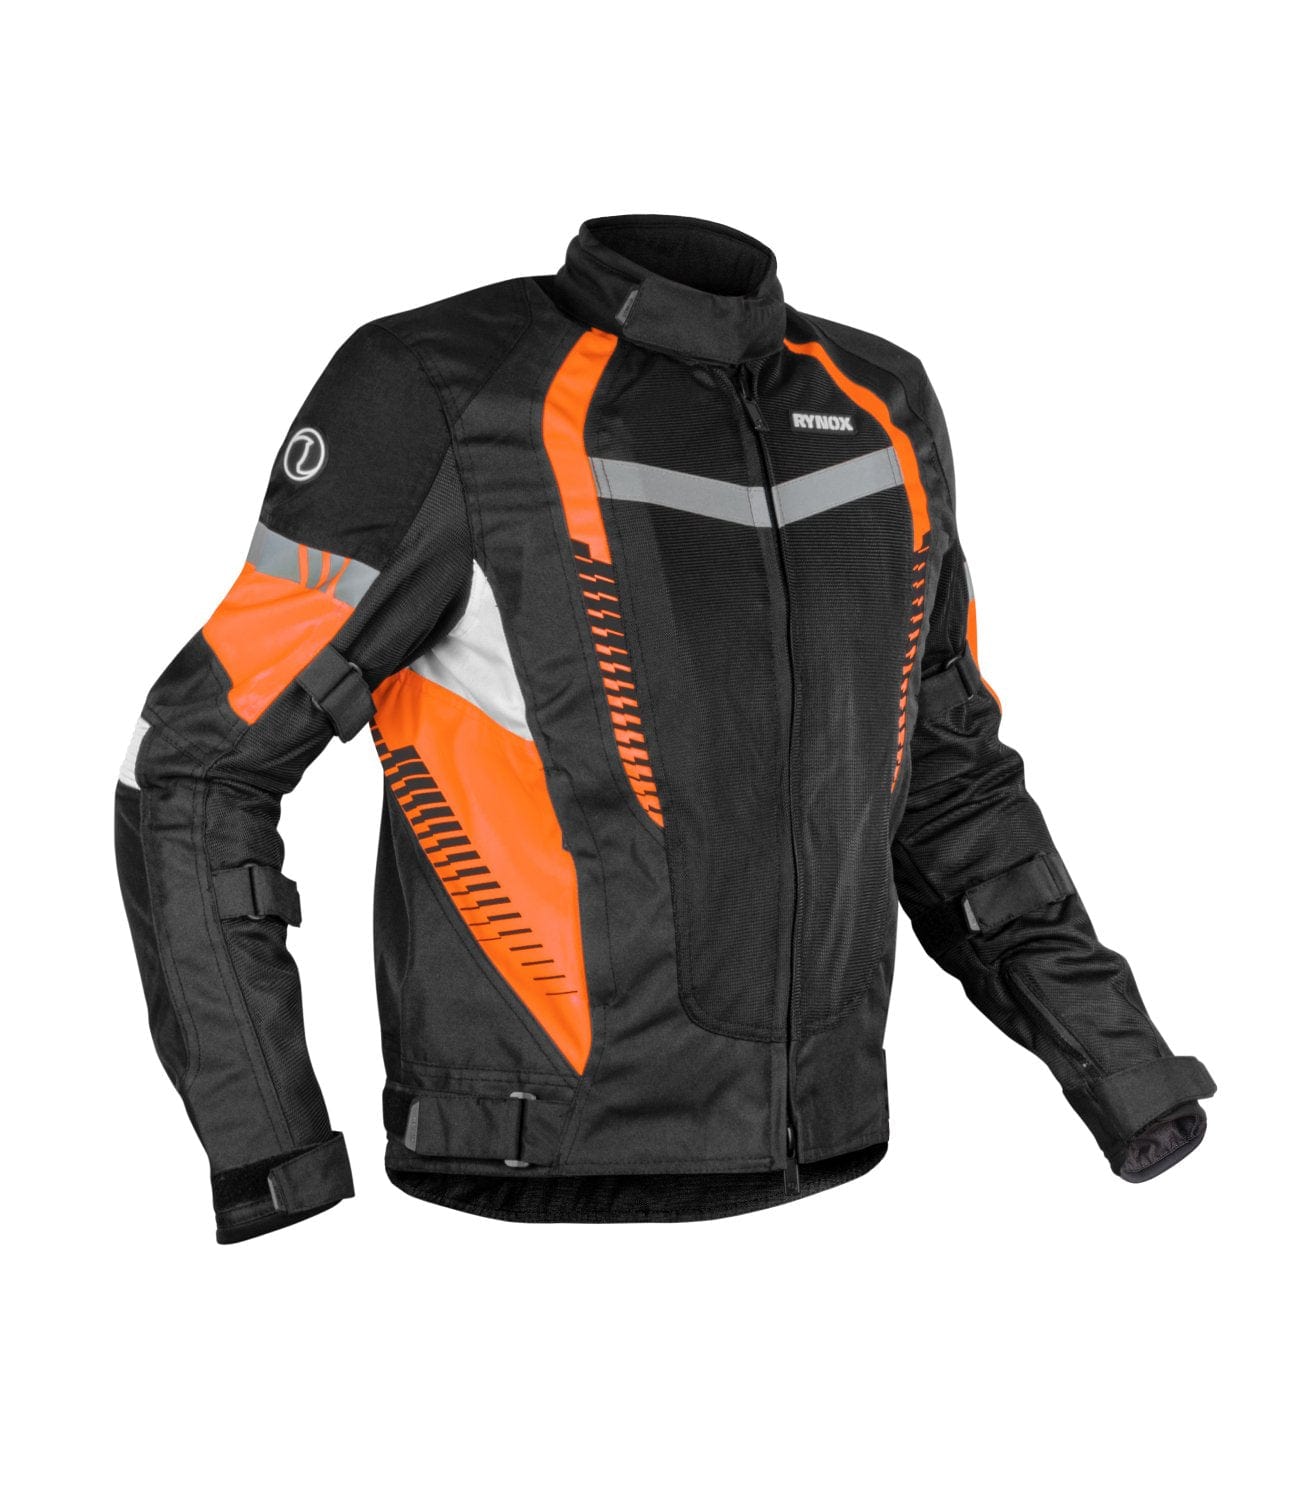 Destination Moto Rynox Tornado Pro 4 Riding Jacket Black Orange